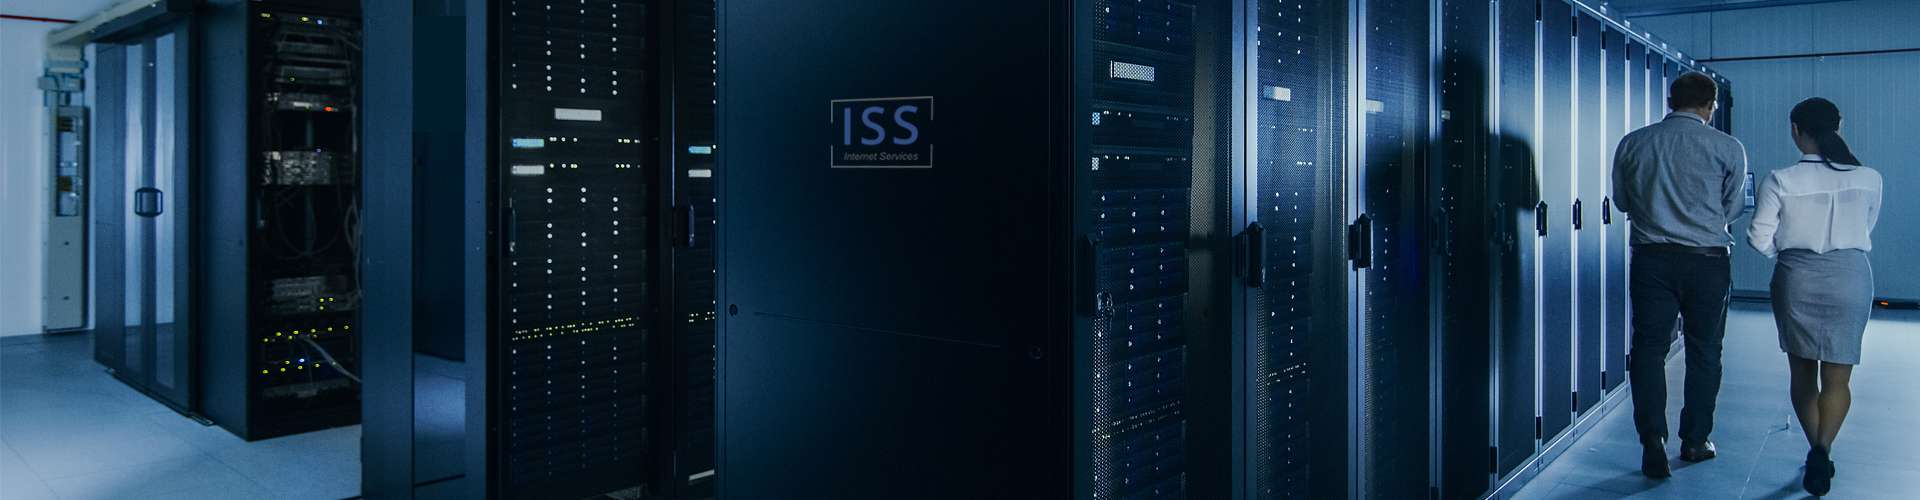 Hosting-Server | ISS - Internet Services | websites, hosting & digital marketing | Stockfoto #1319513732 Gorodenkoff